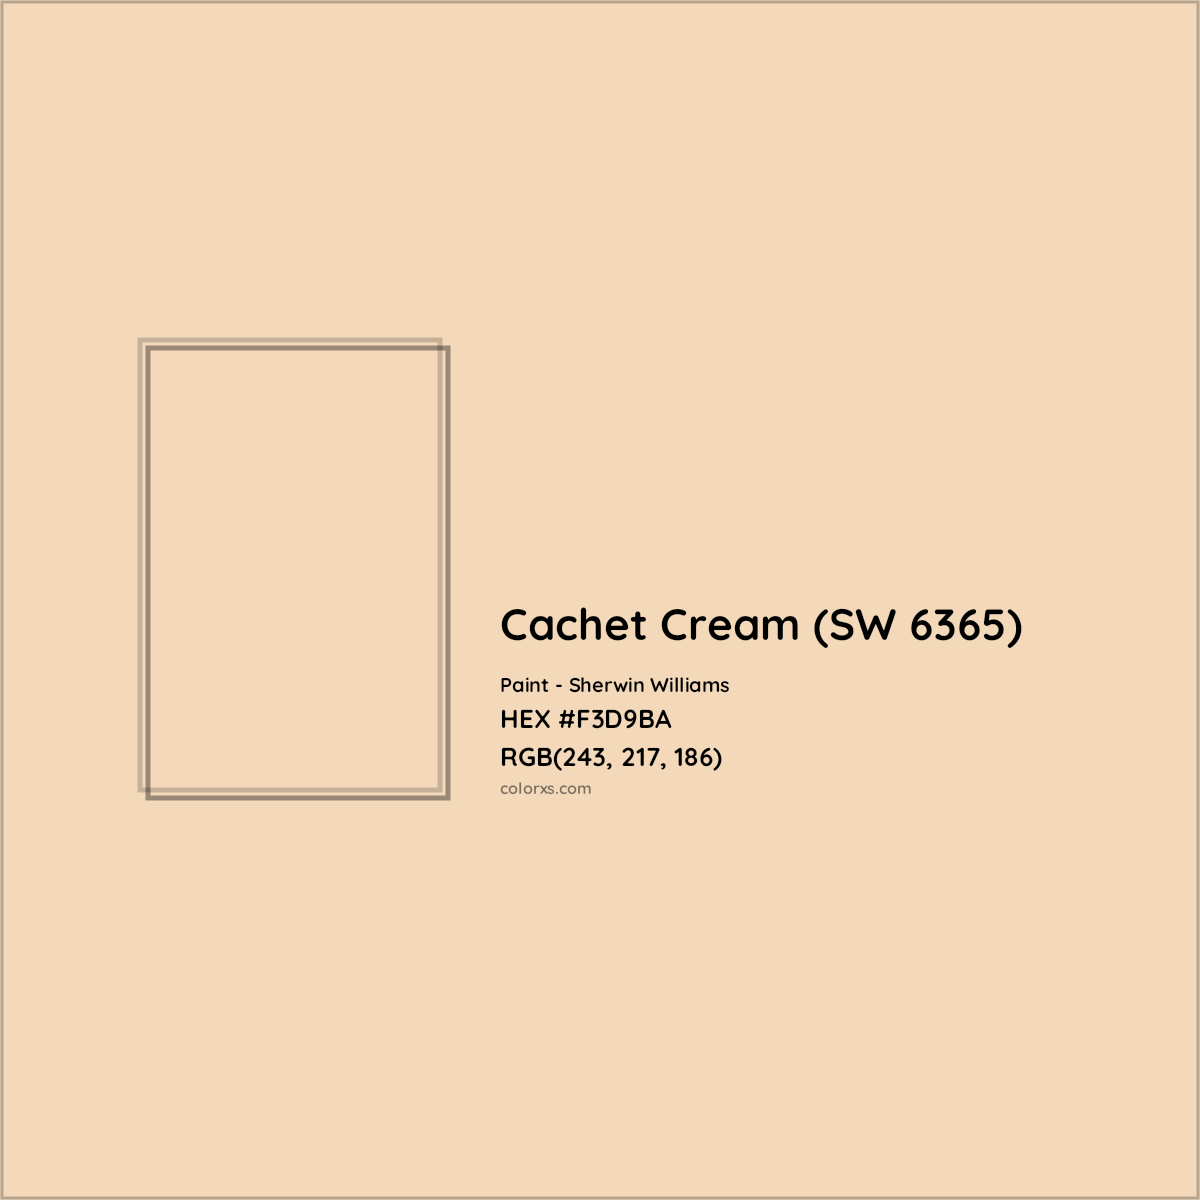 HEX #F3D9BA Cachet Cream (SW 6365) Paint Sherwin Williams - Color Code